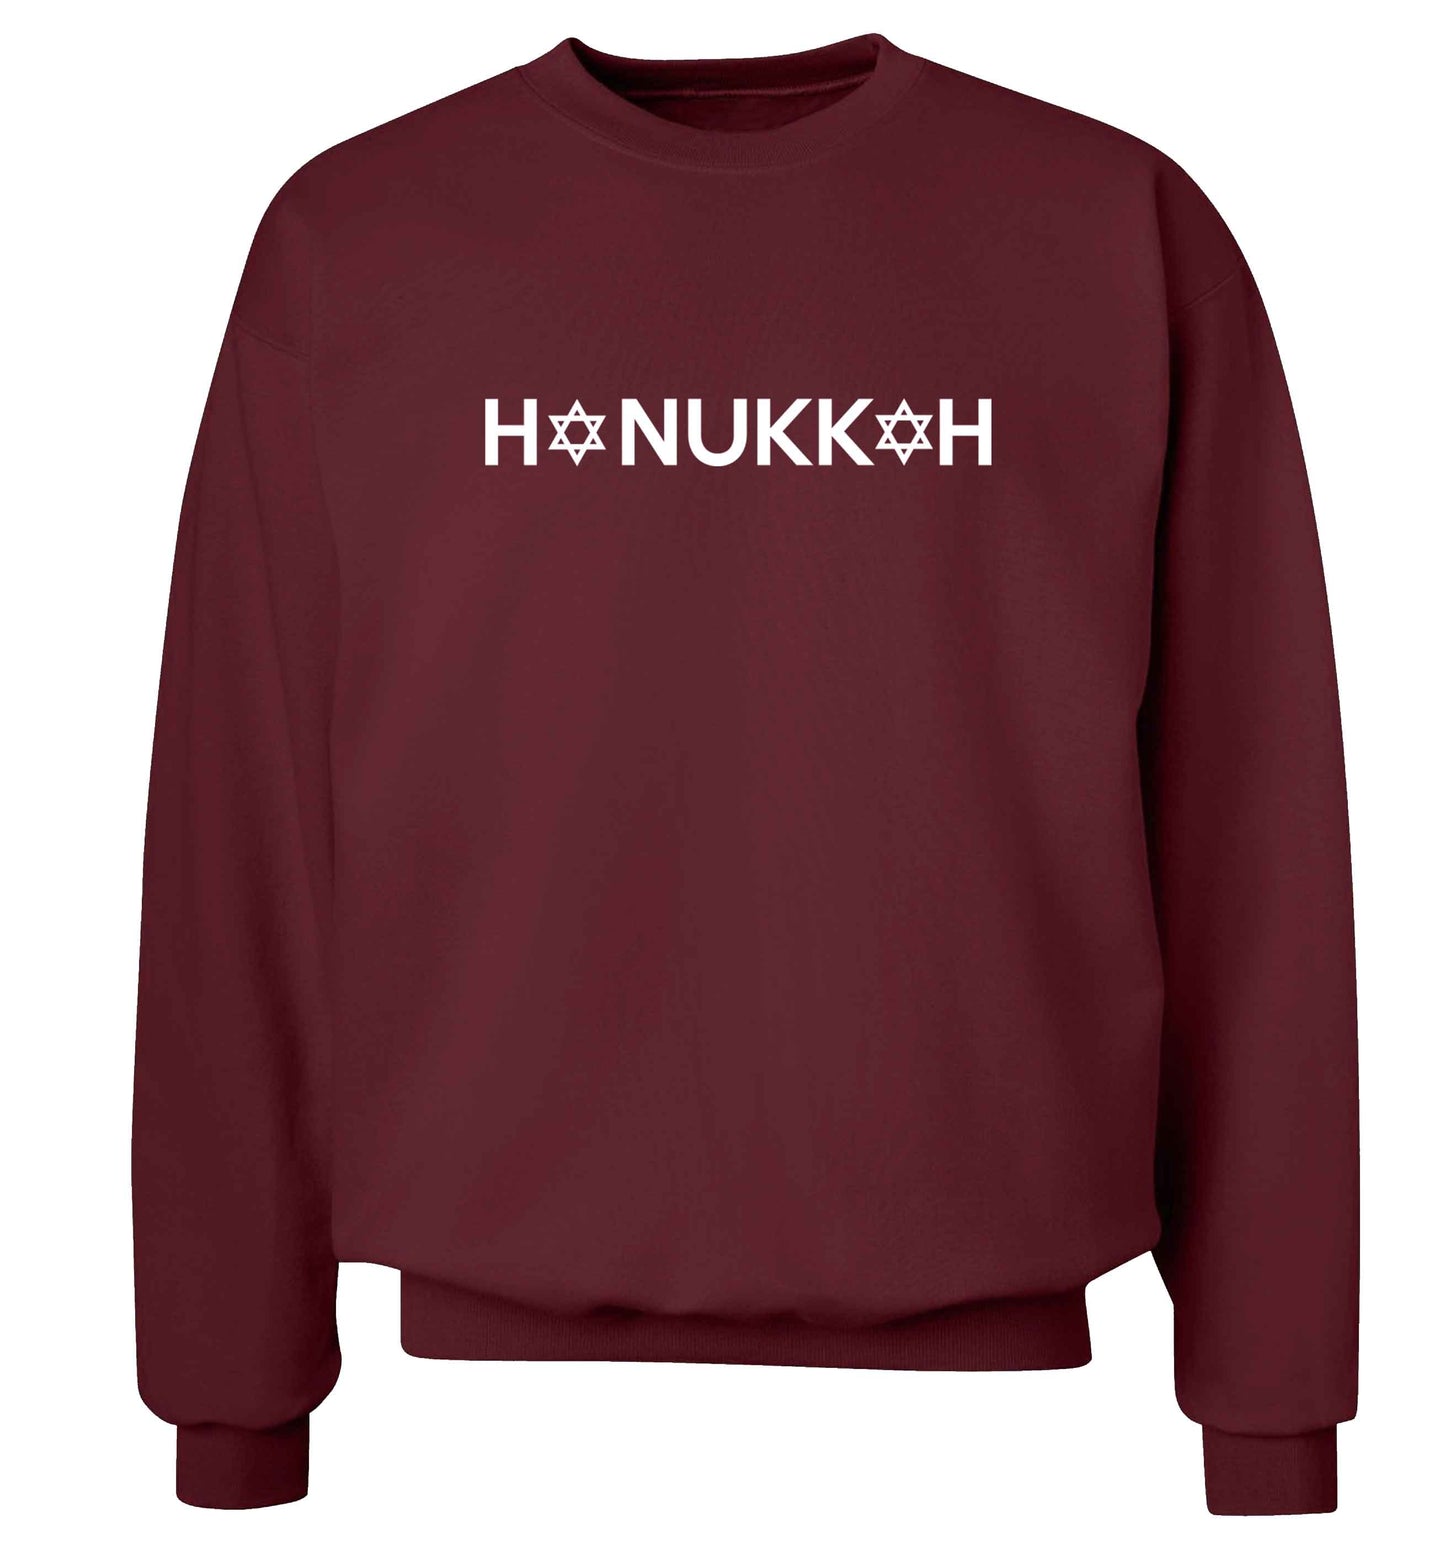 Hanukkah star of david adult's unisex maroon sweater 2XL